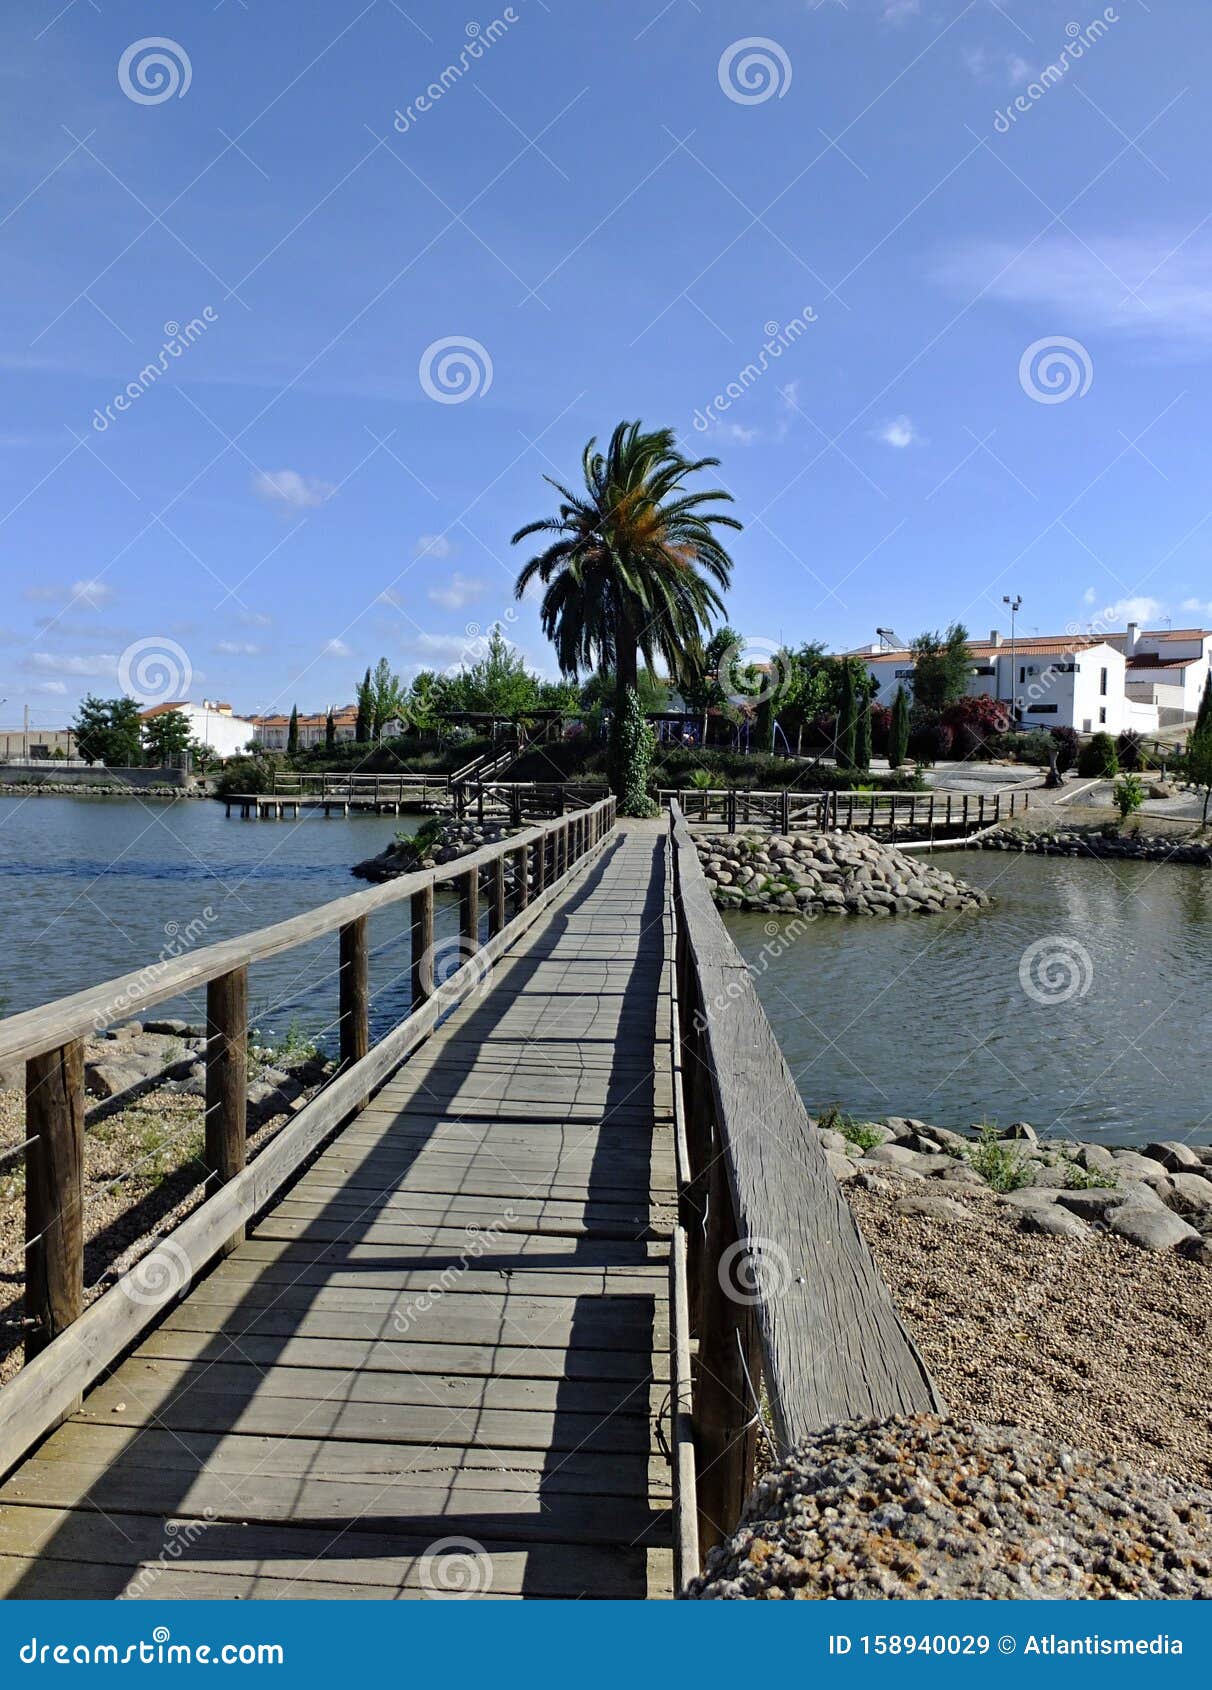 footbridge at the fishing pond in la coronada, badajoz - spain